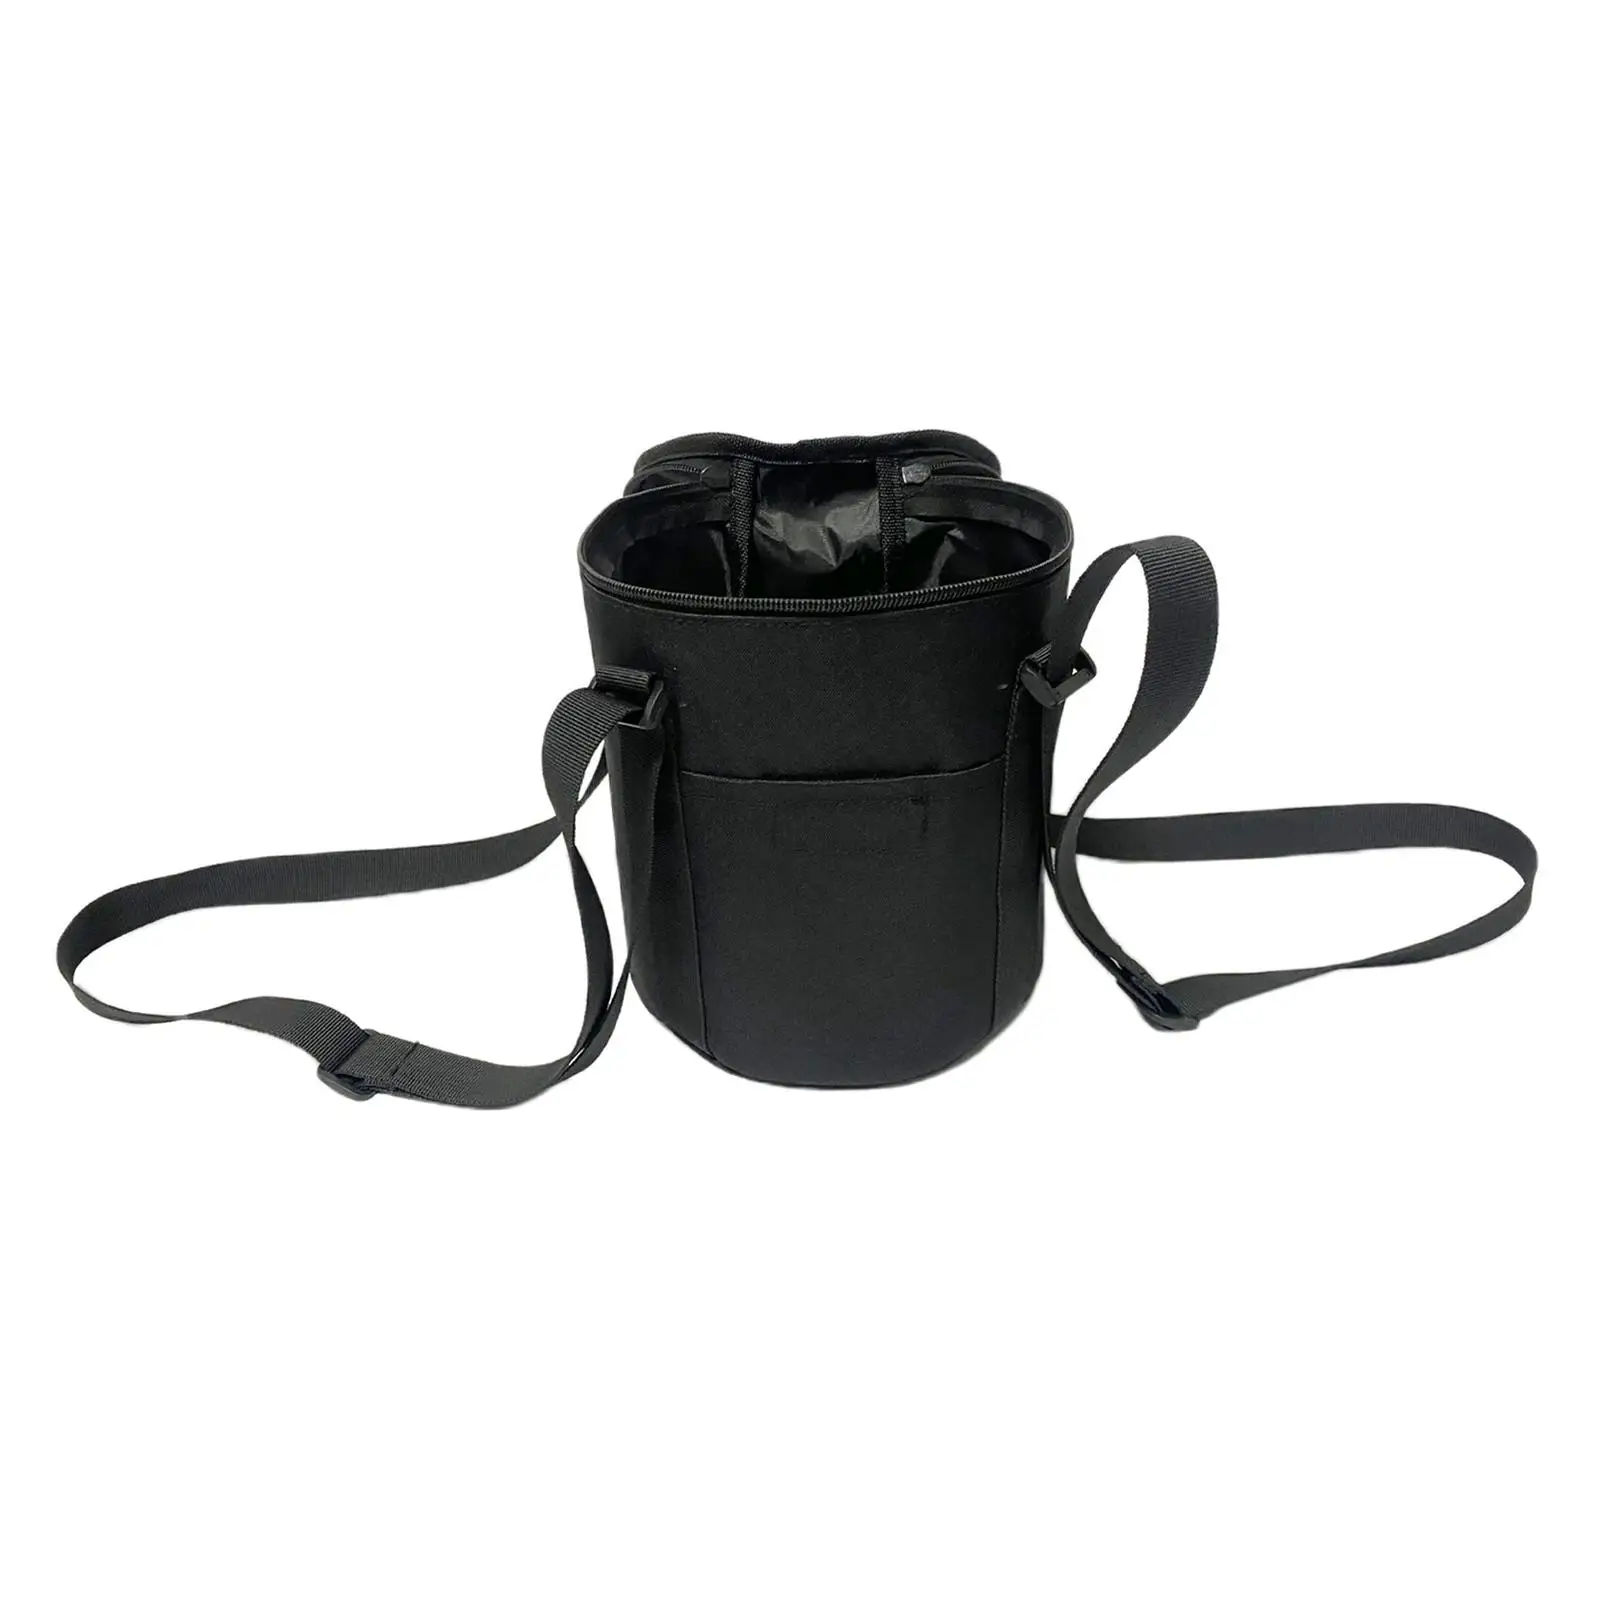 Tabletop Fire Pit Bag Adjustable Shoulder Straps Fire Pit Storage Bag 7.5``x7.5``x7.9`` Portable for Outdoor Camping RV Travel